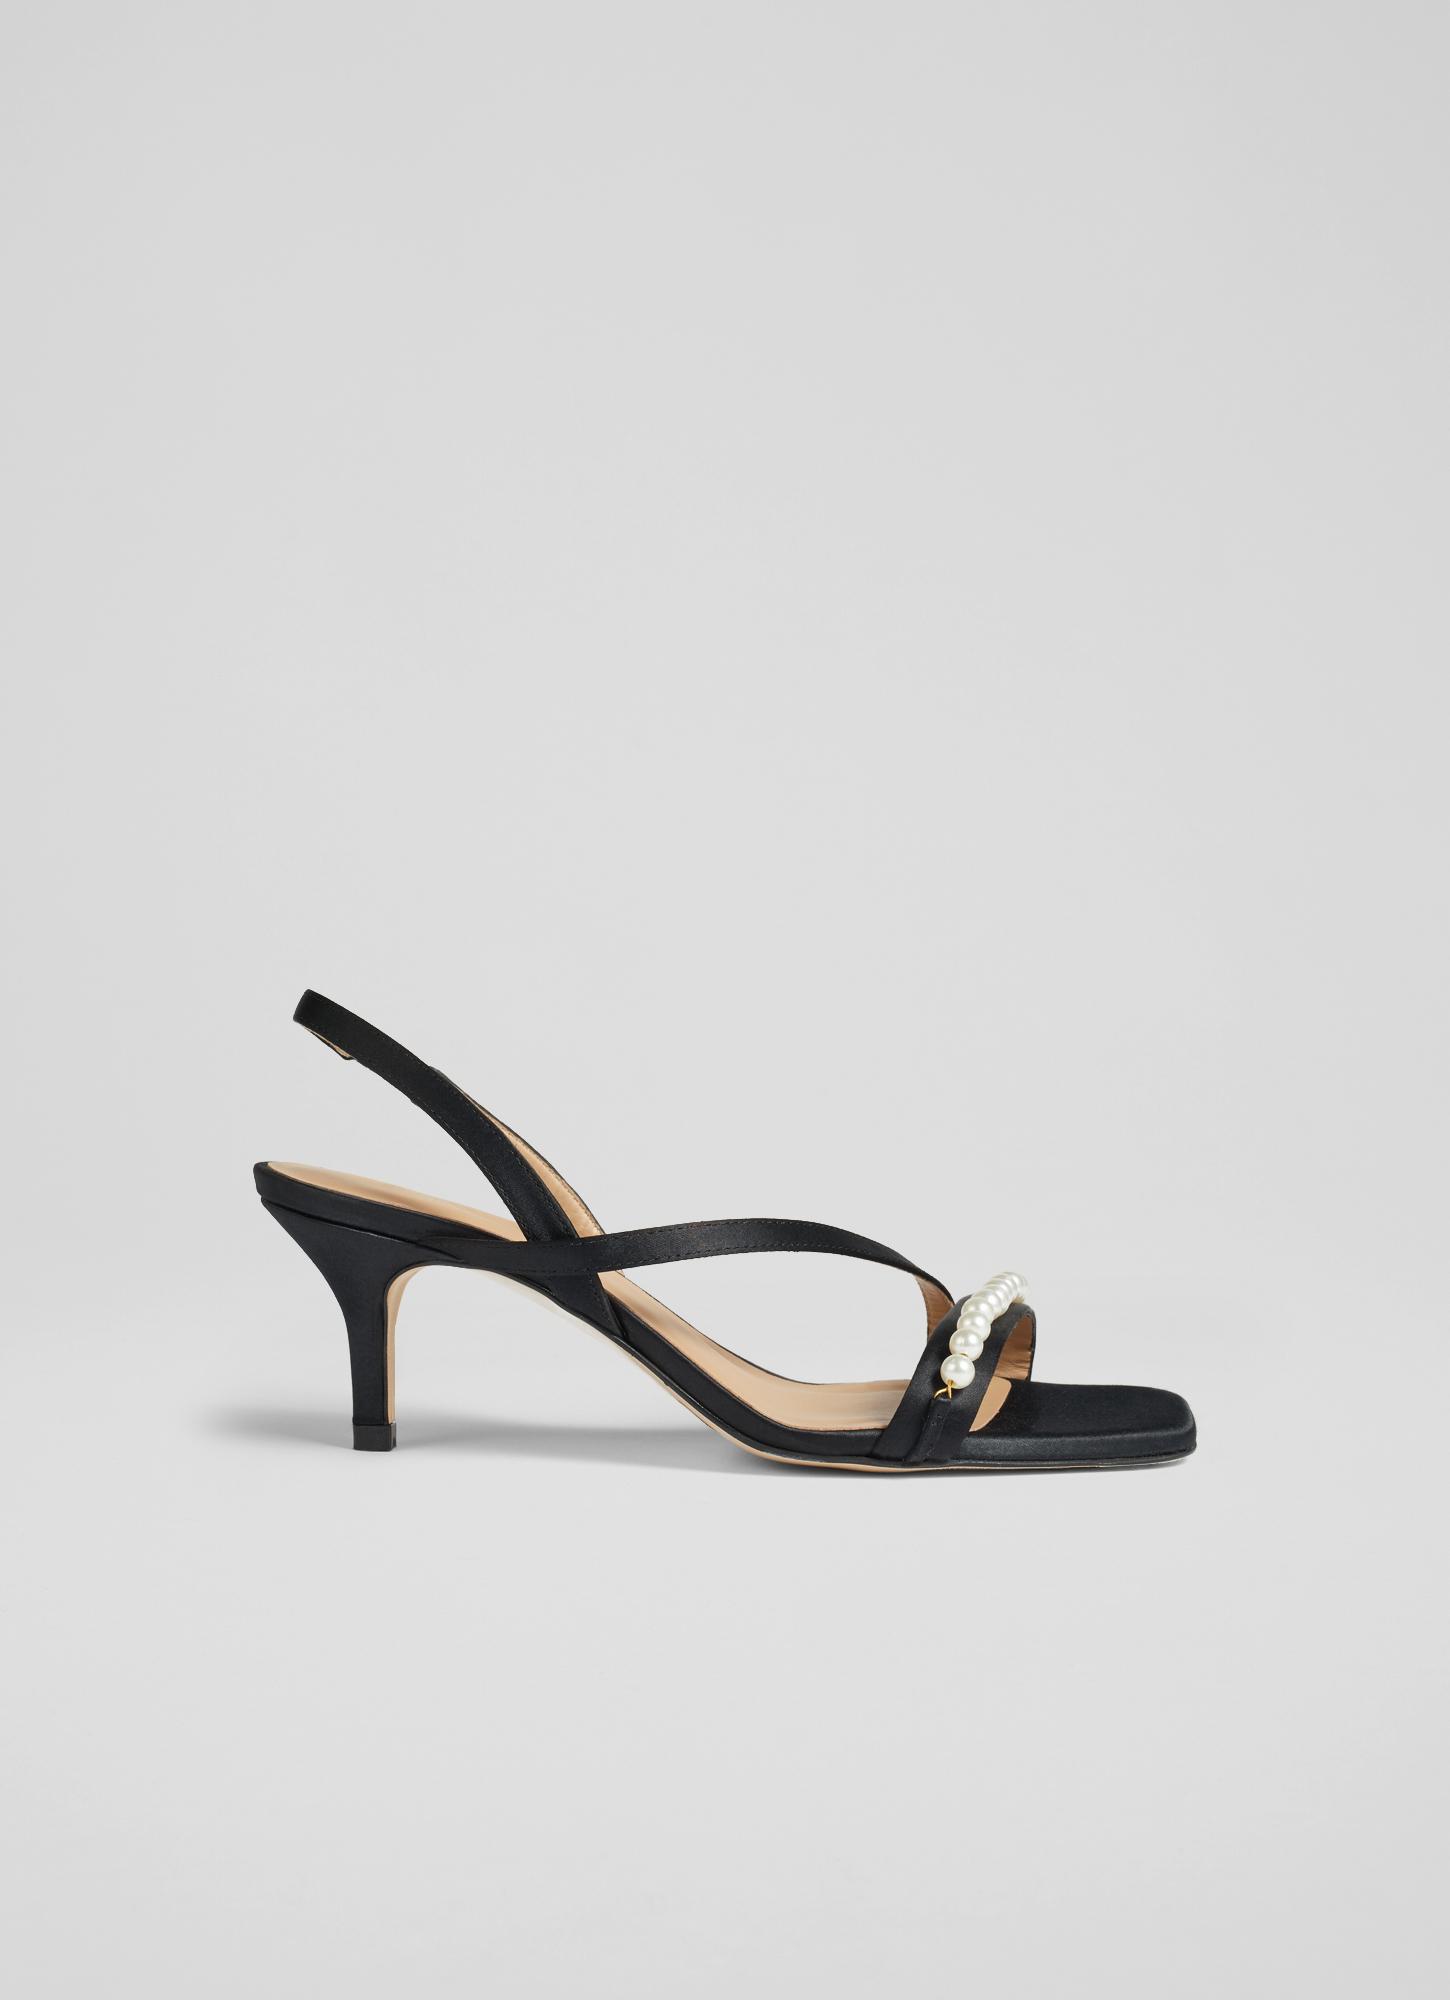 Greta Black Pearl Asymmetric Strappy Sandals | Shoes - LK Bennett